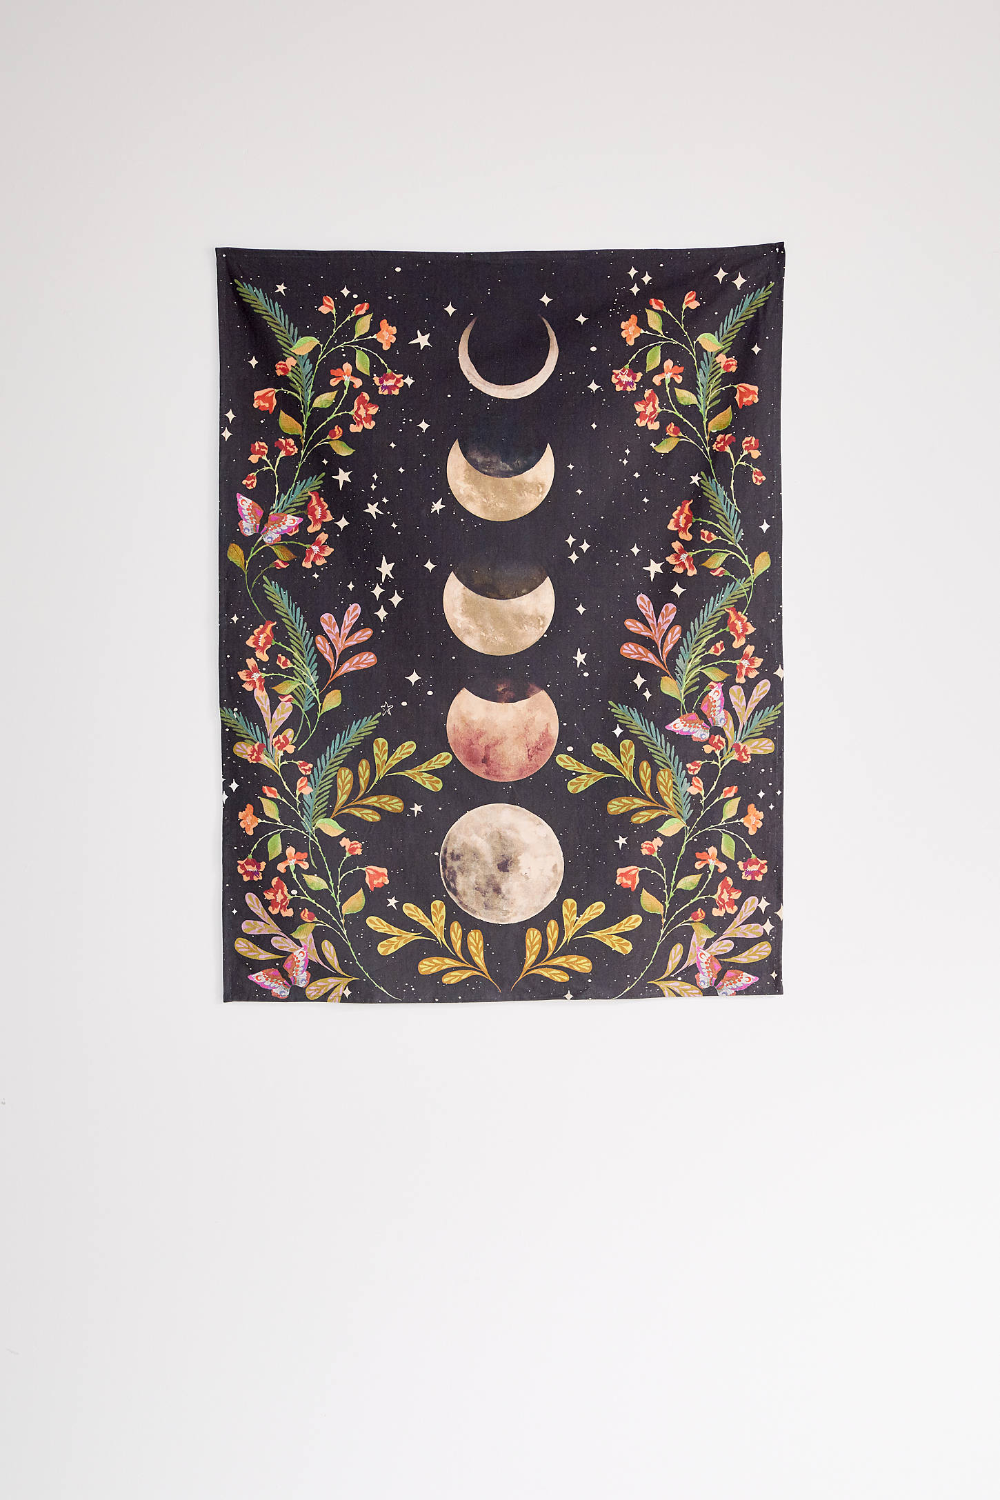 Moonlit Garden Tapestry Moon Phase Flowers Wall Art